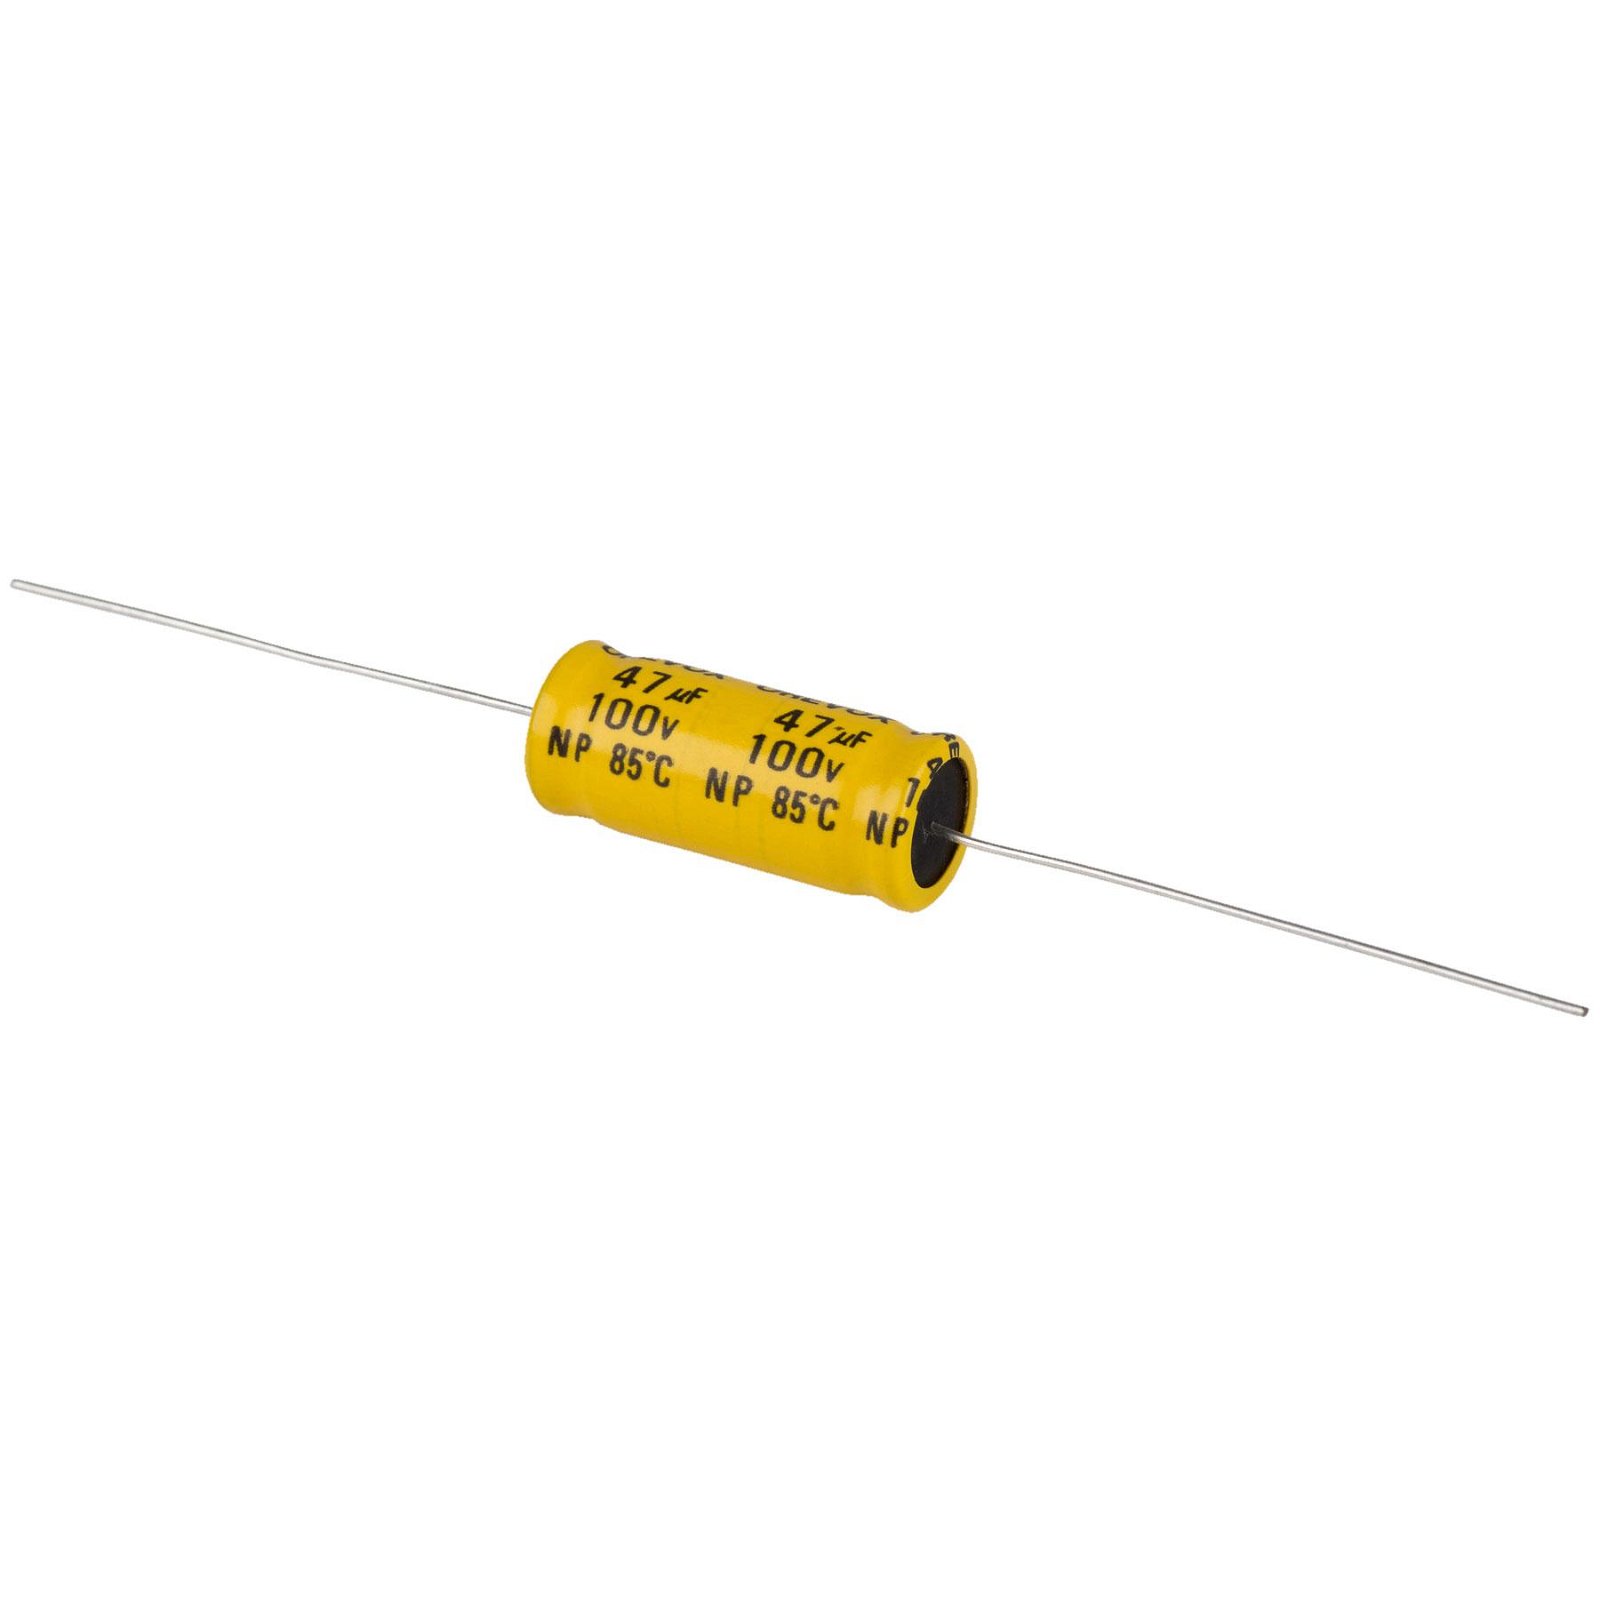  axial lead non-polar electrolytic capacitors 2